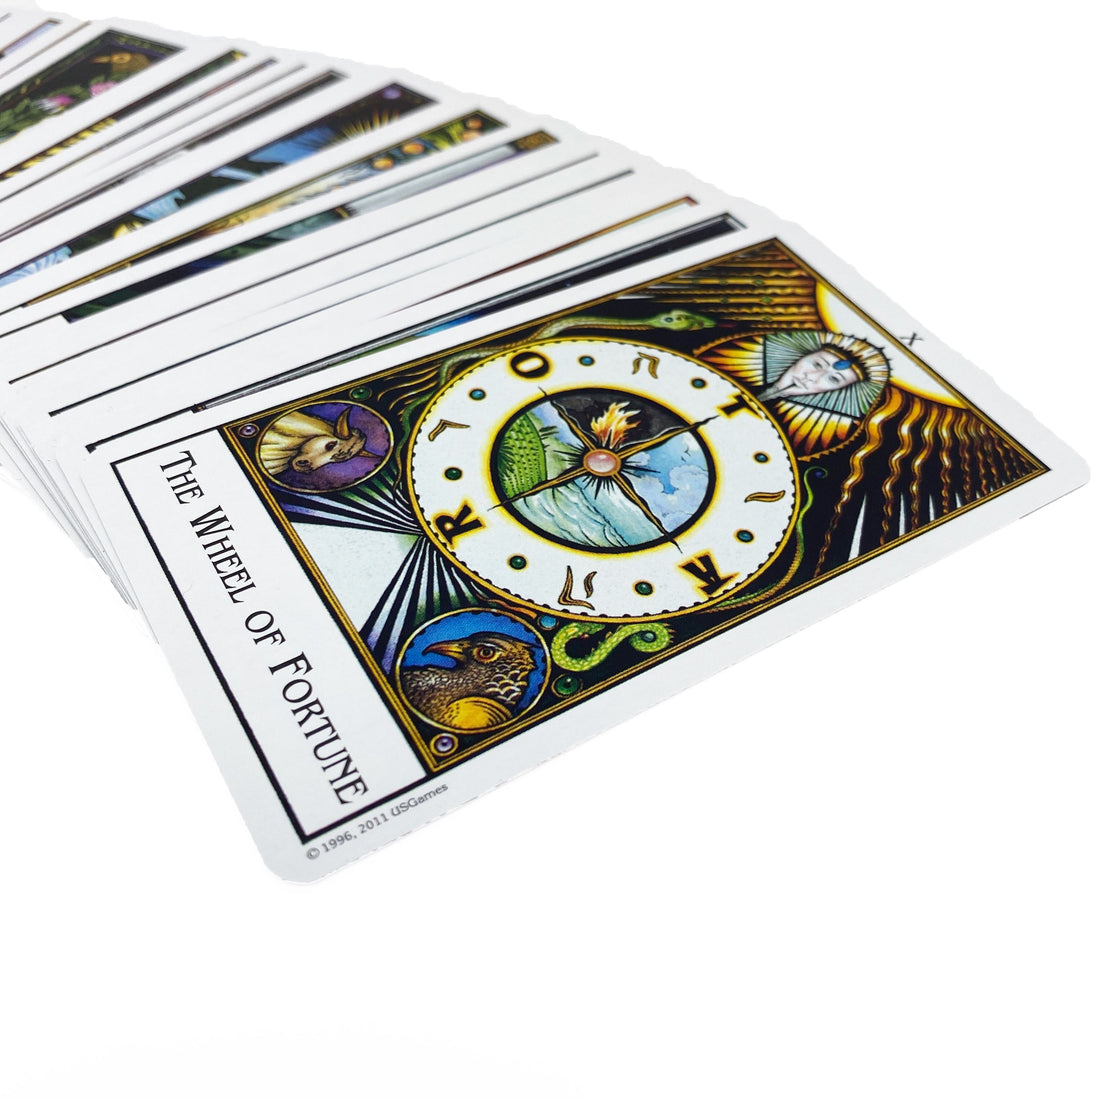 The New Palladini Tarot Deck Tarot Cards Non-HOI 